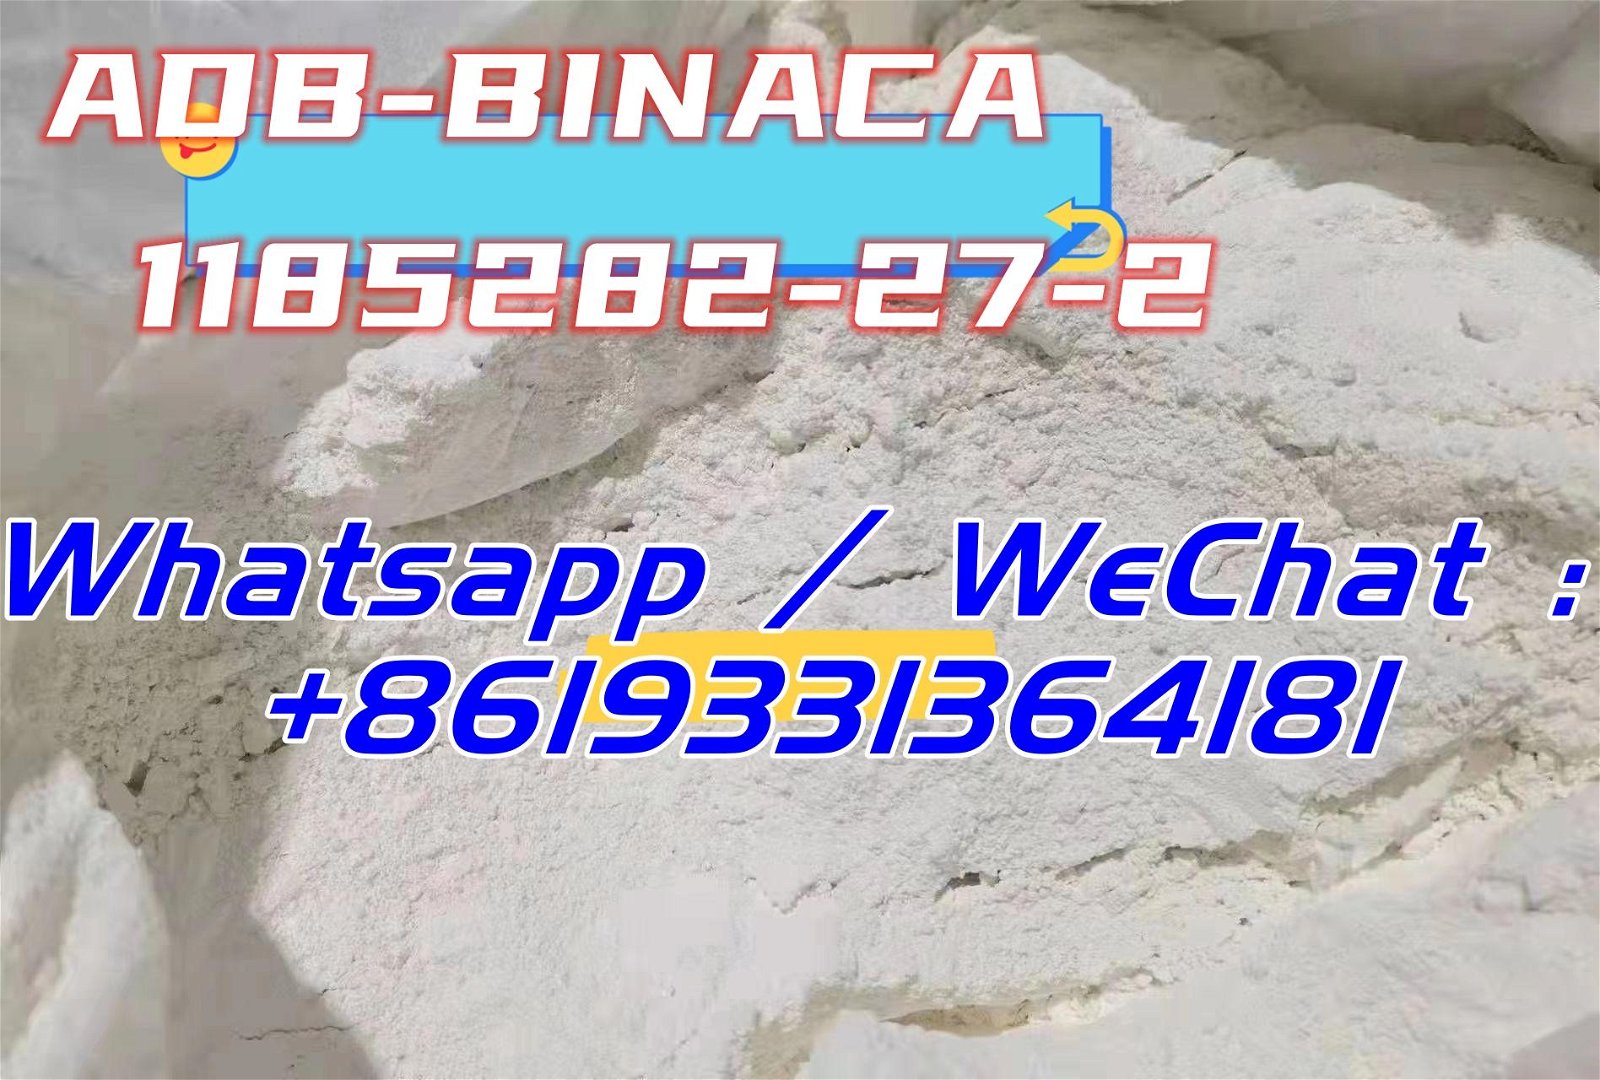 Sell ADBB adbb white powder ADB-BINACA cas 1185282-27-2 in stock